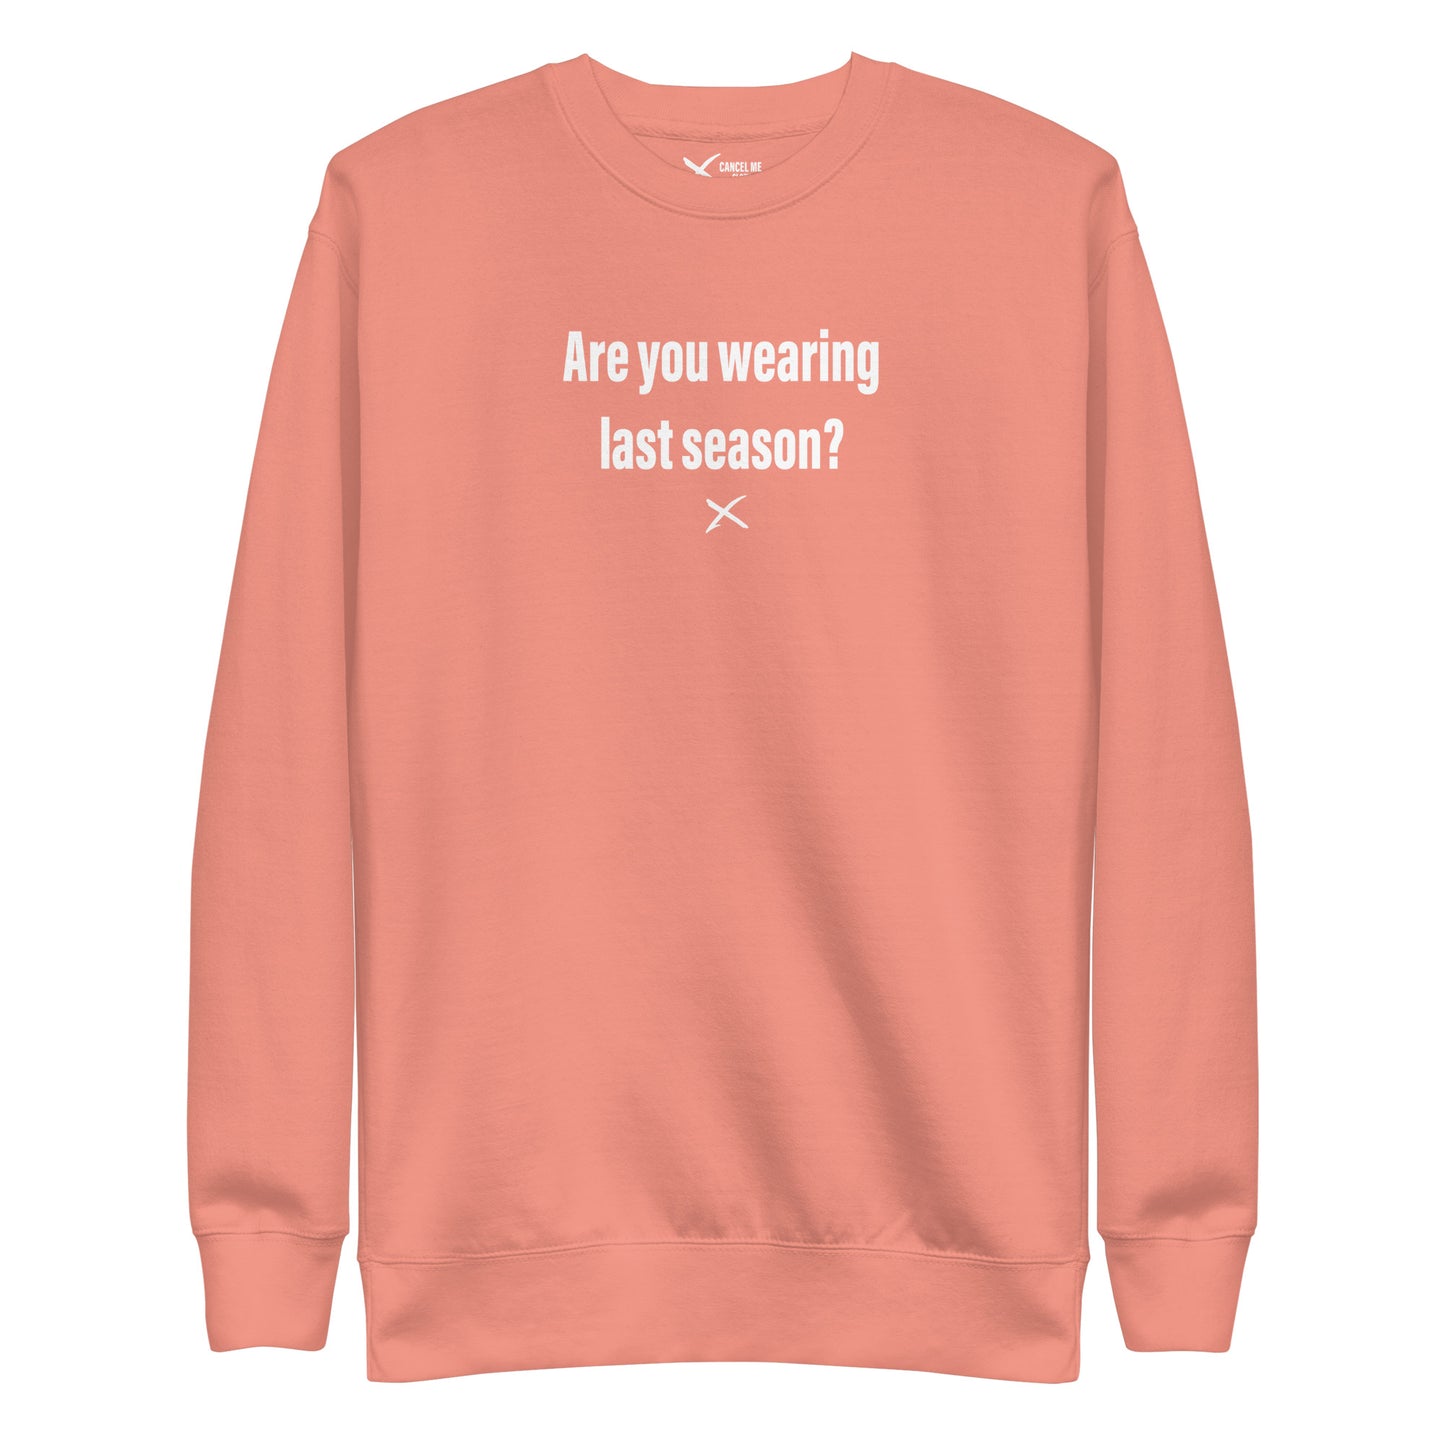 Are you wearing last season? - Sweatshirt